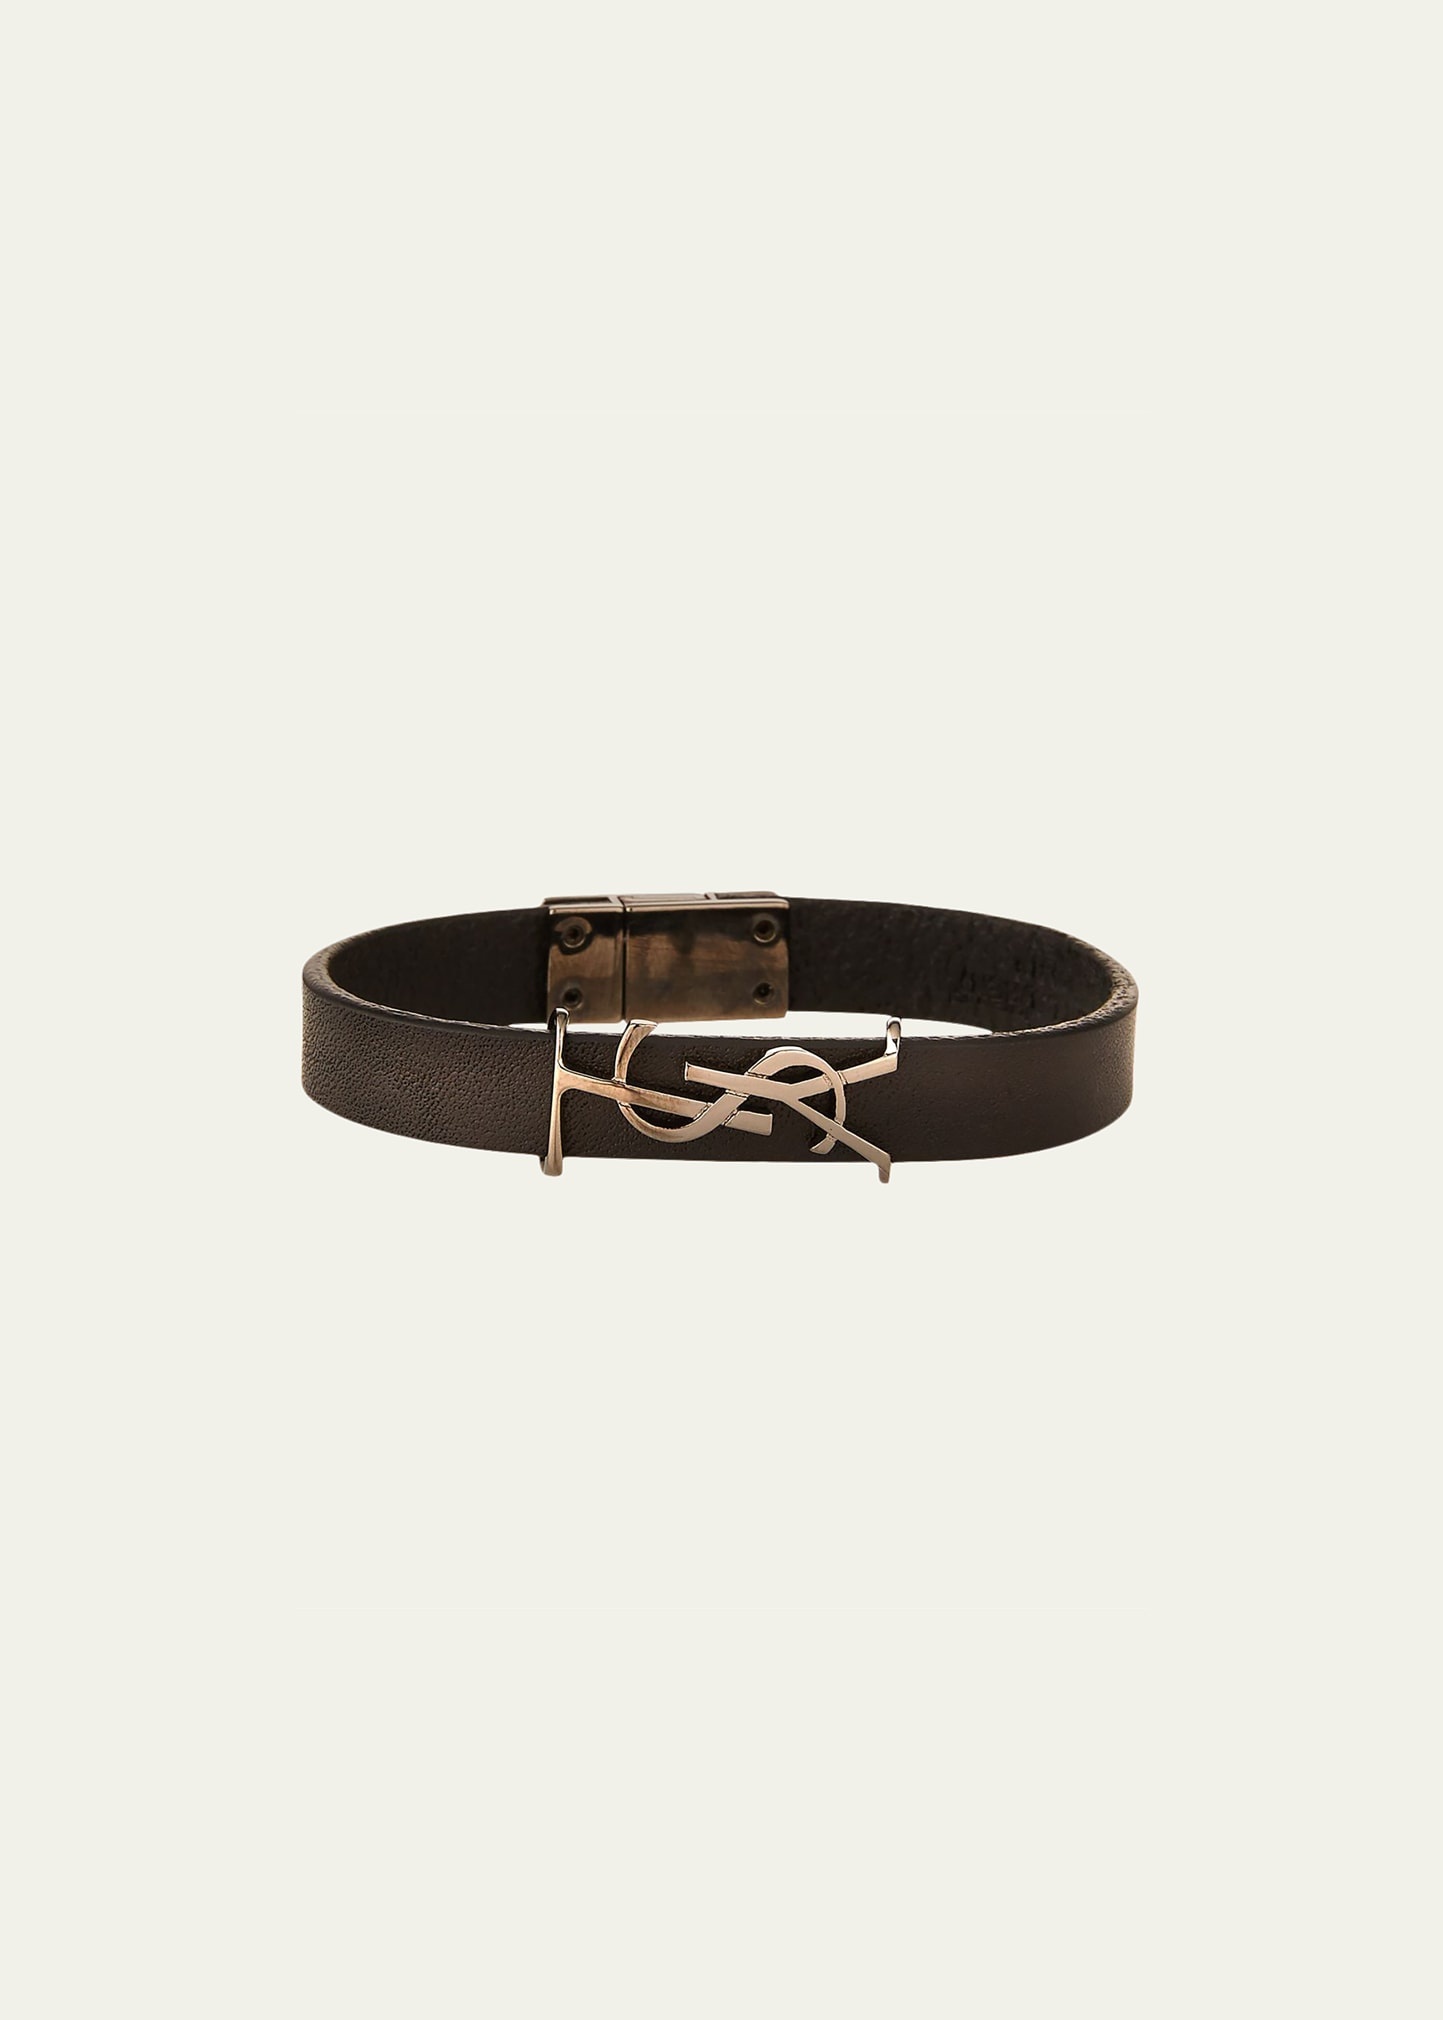 Leather YSL Monogram Bracelet, Black, Size Small - 1